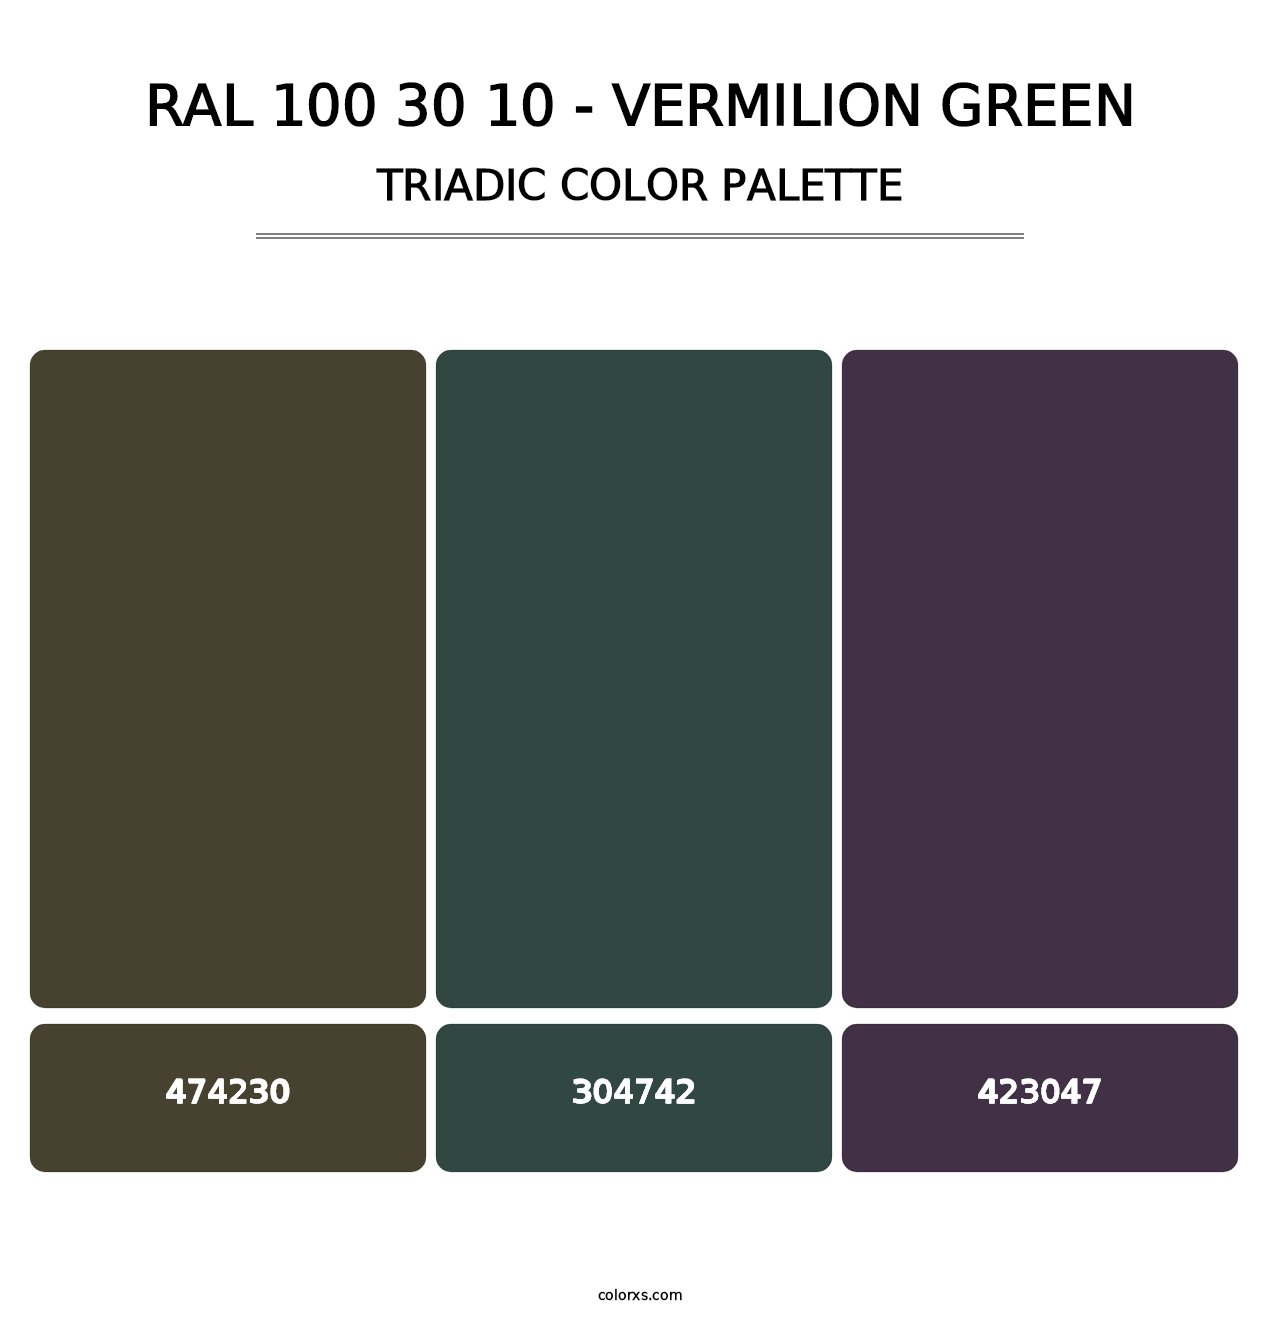 RAL 100 30 10 - Vermilion Green - Triadic Color Palette